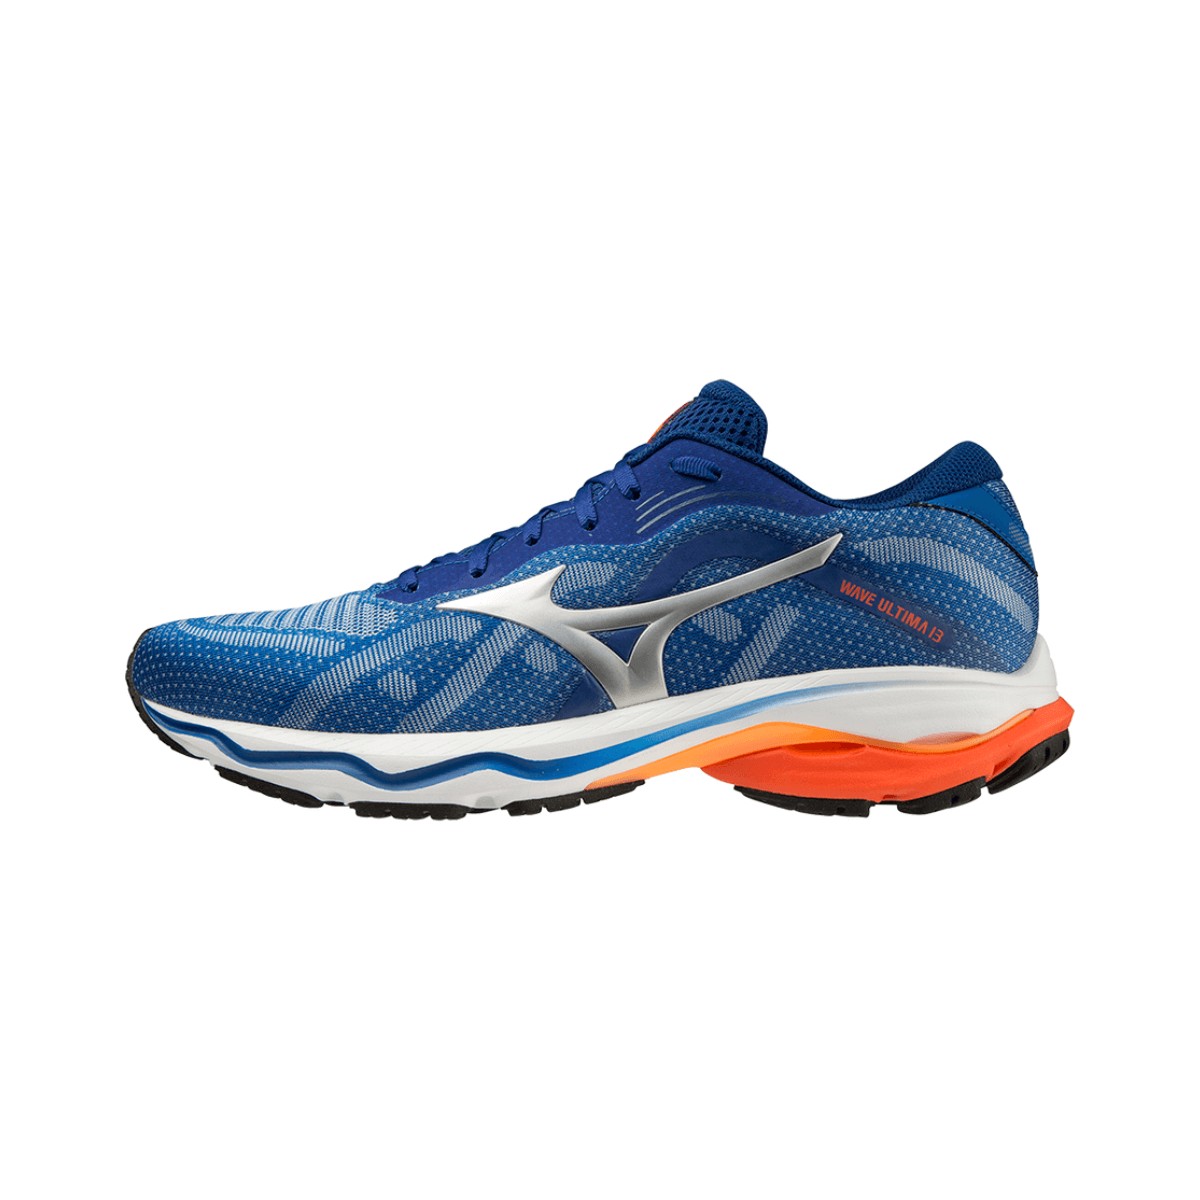 Mizuno Wave Ultima 13 Shoes Blue Orange AW22, Size 42 - EUR